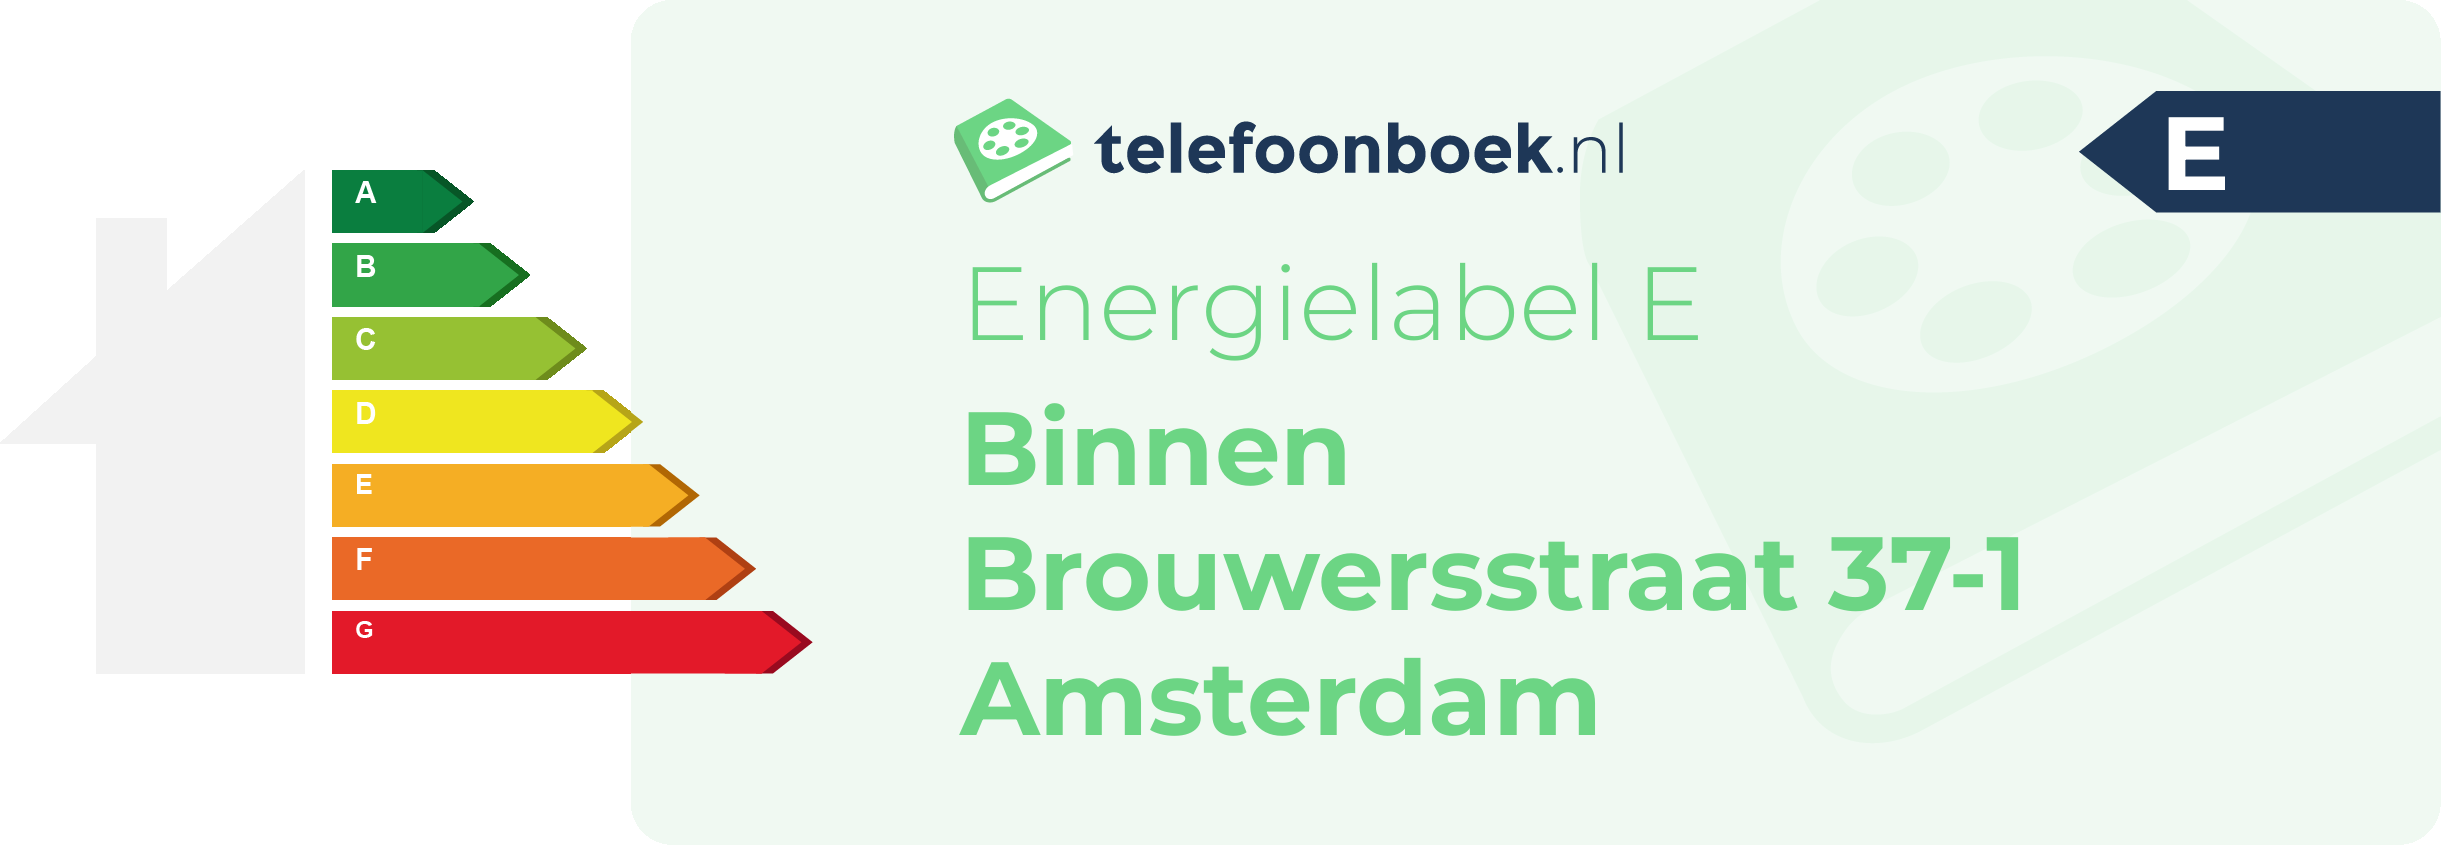 Energielabel Binnen Brouwersstraat 37-1 Amsterdam